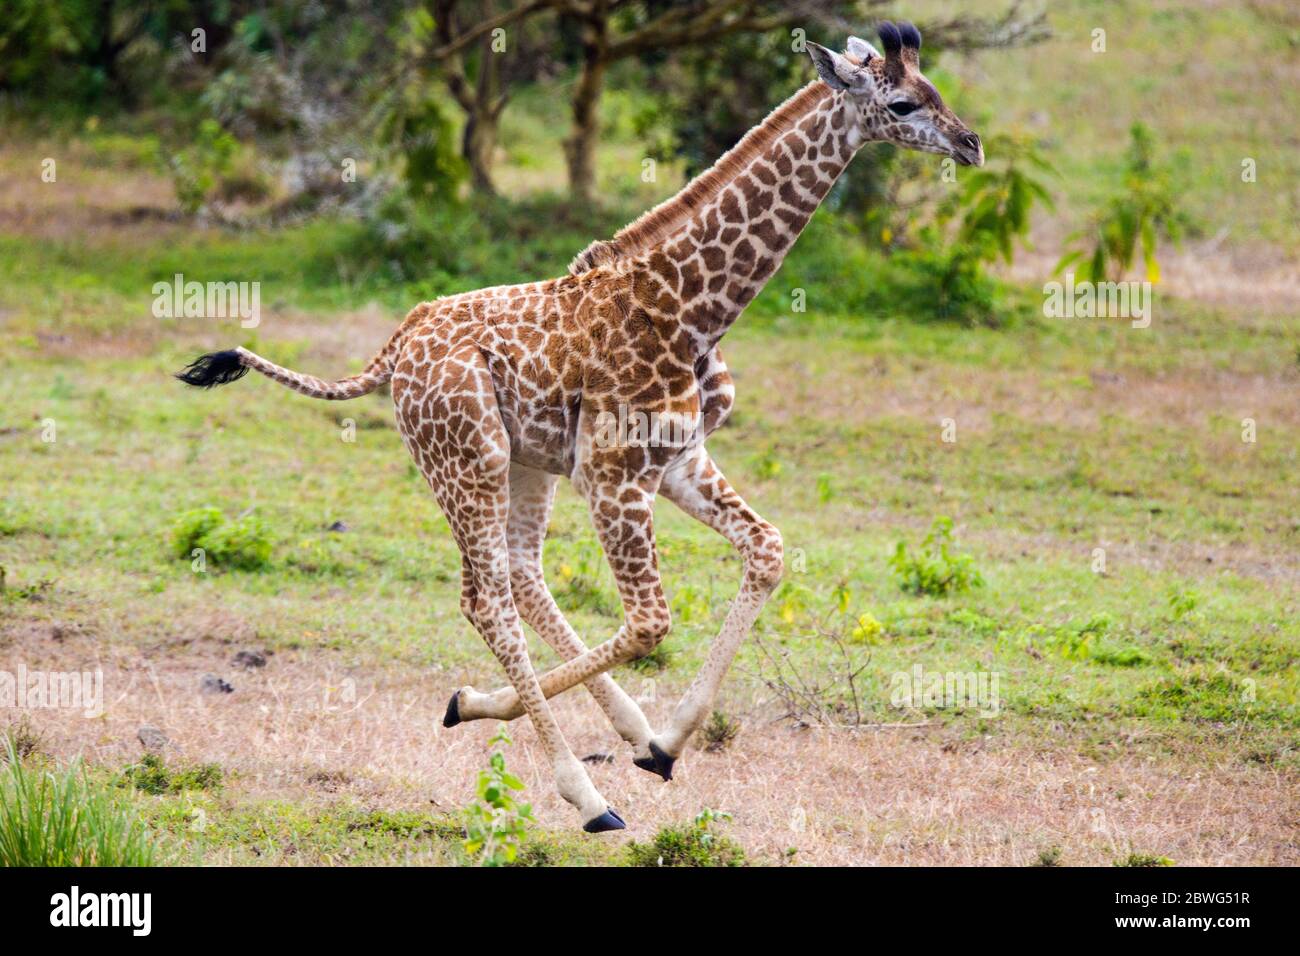 Masai giraffe (Giraffa camelopardalis tippelskirchii) running, Parco Nazionale di Arusha, Tanzania, Africa Foto Stock